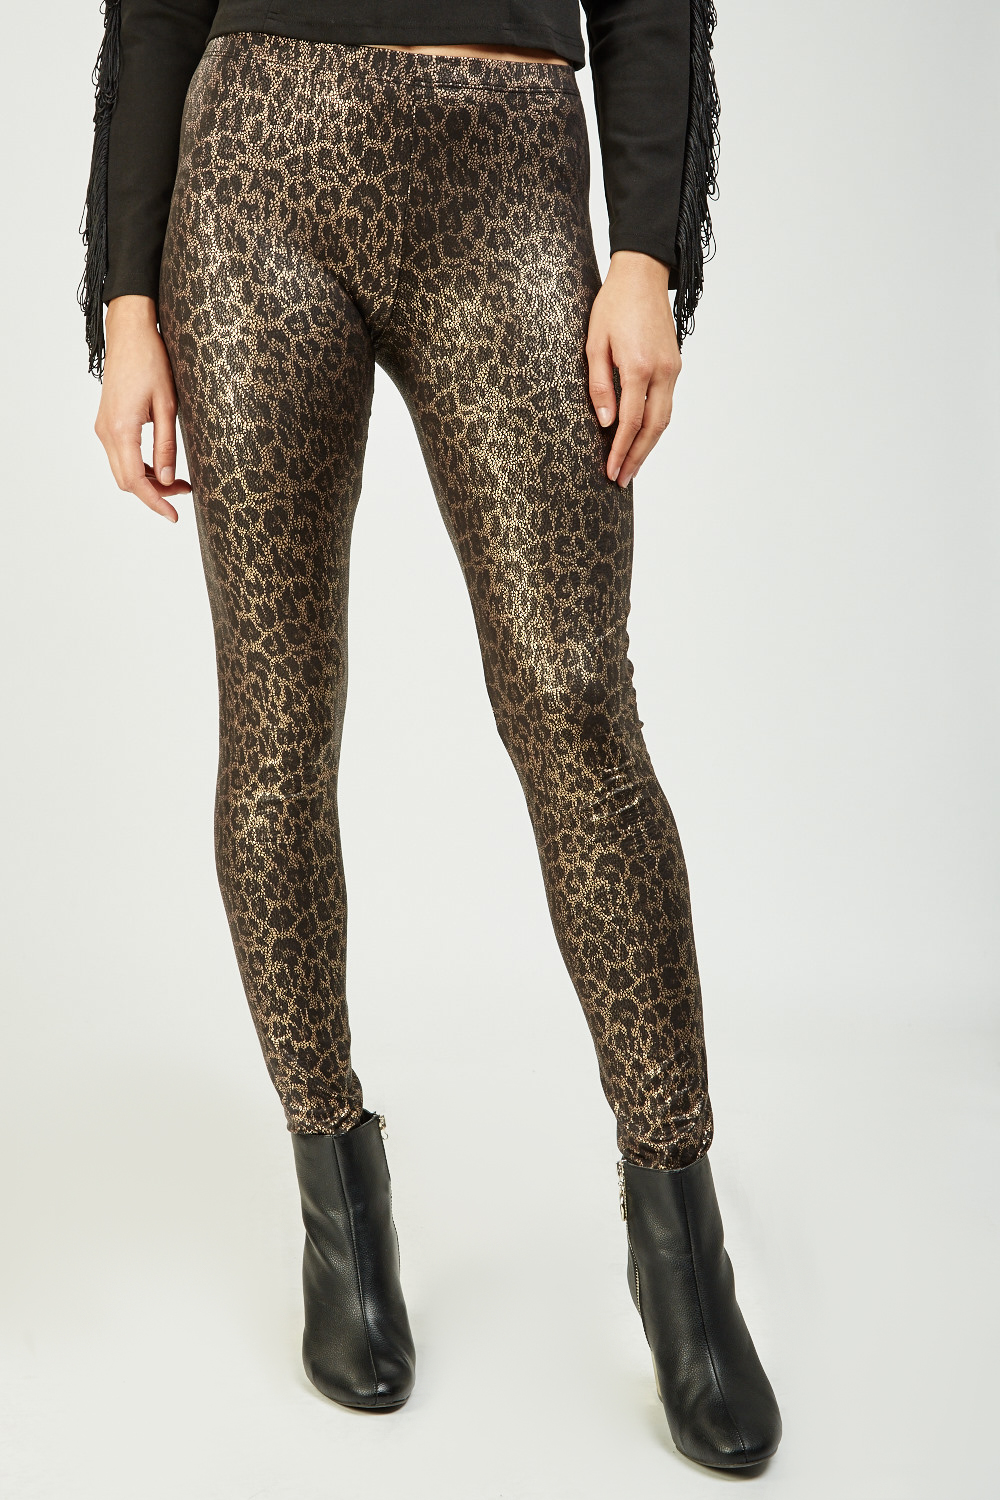 Metallic Leopard Print Leggings - Just $7